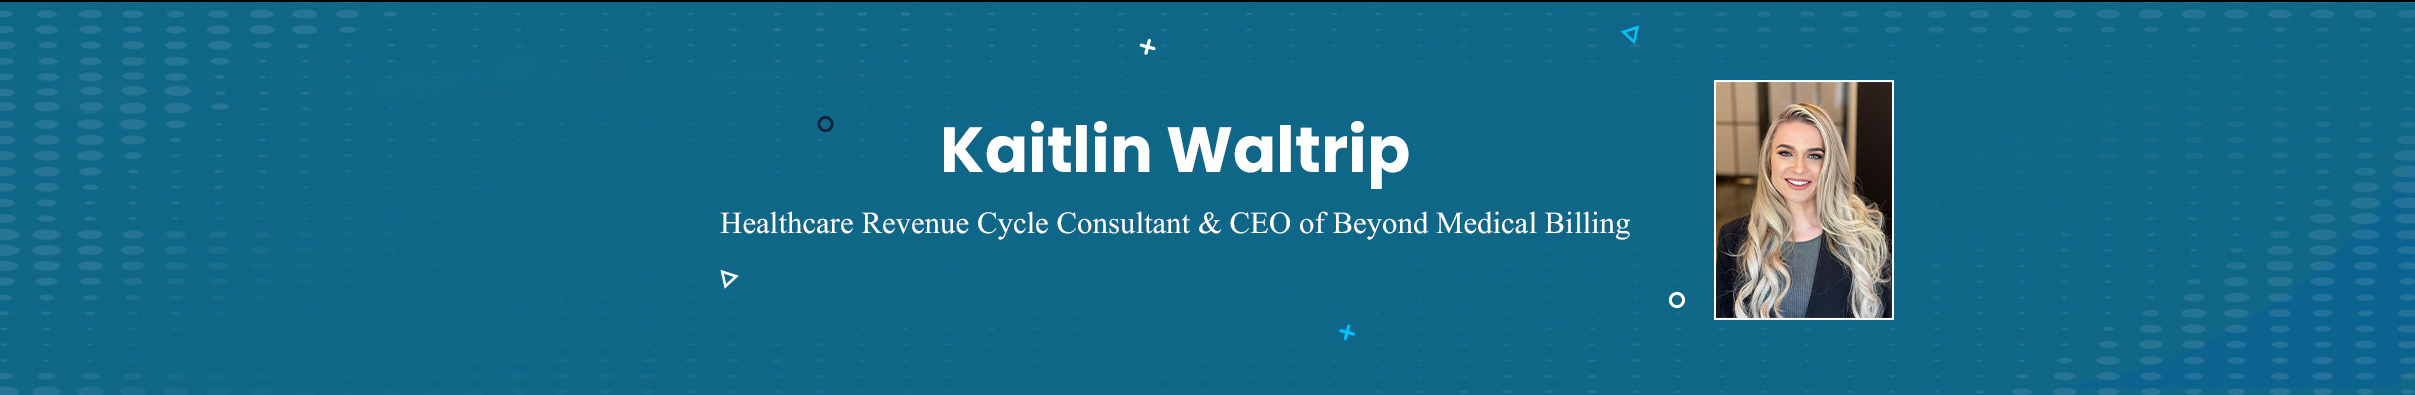 Kaitlin Waltrip's profile banner